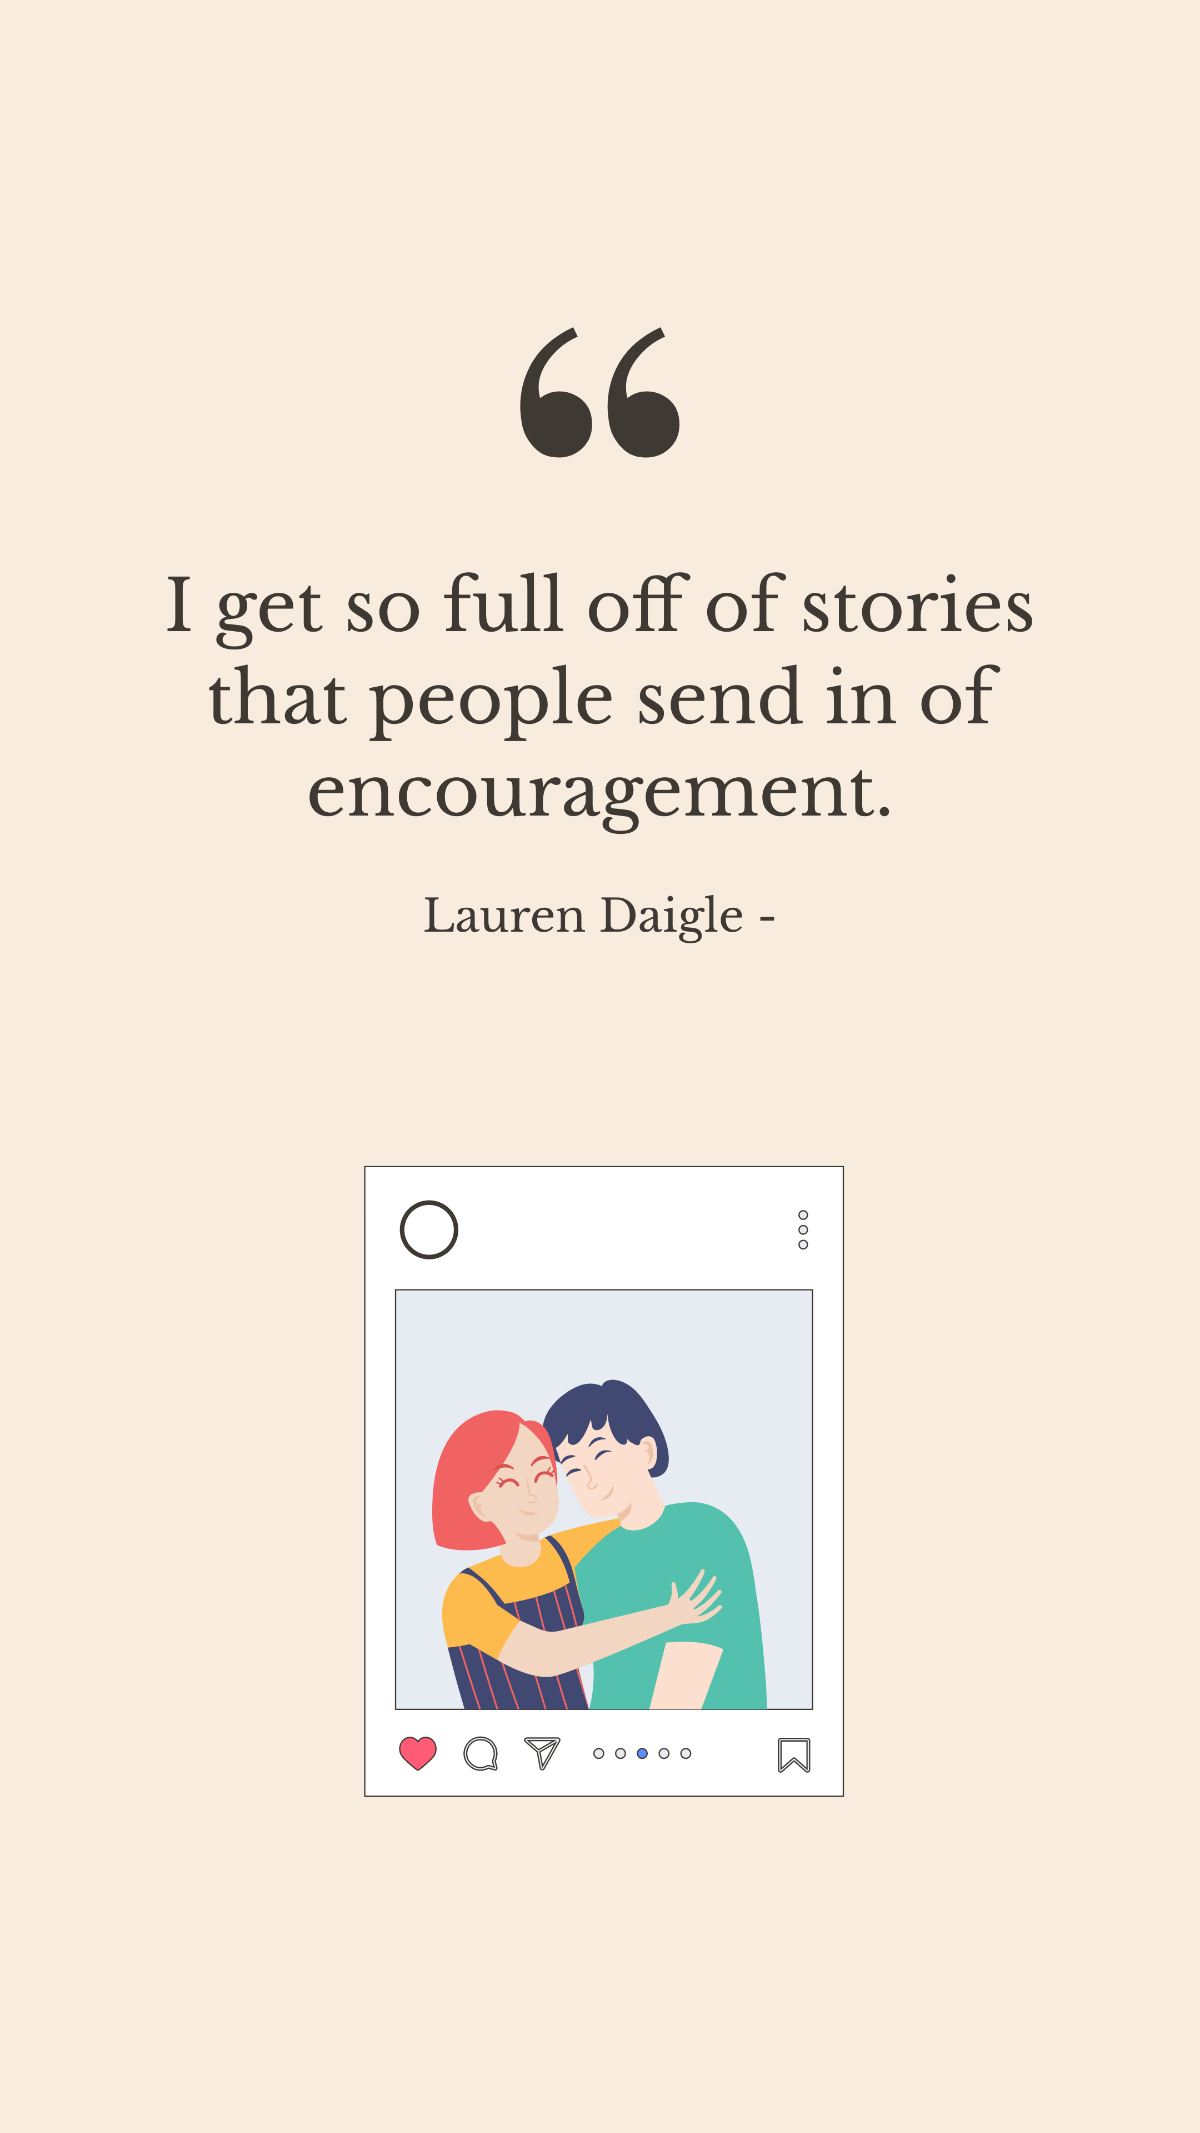 Lauren Daigle - I get so full off of stories that people send in of encouragement.